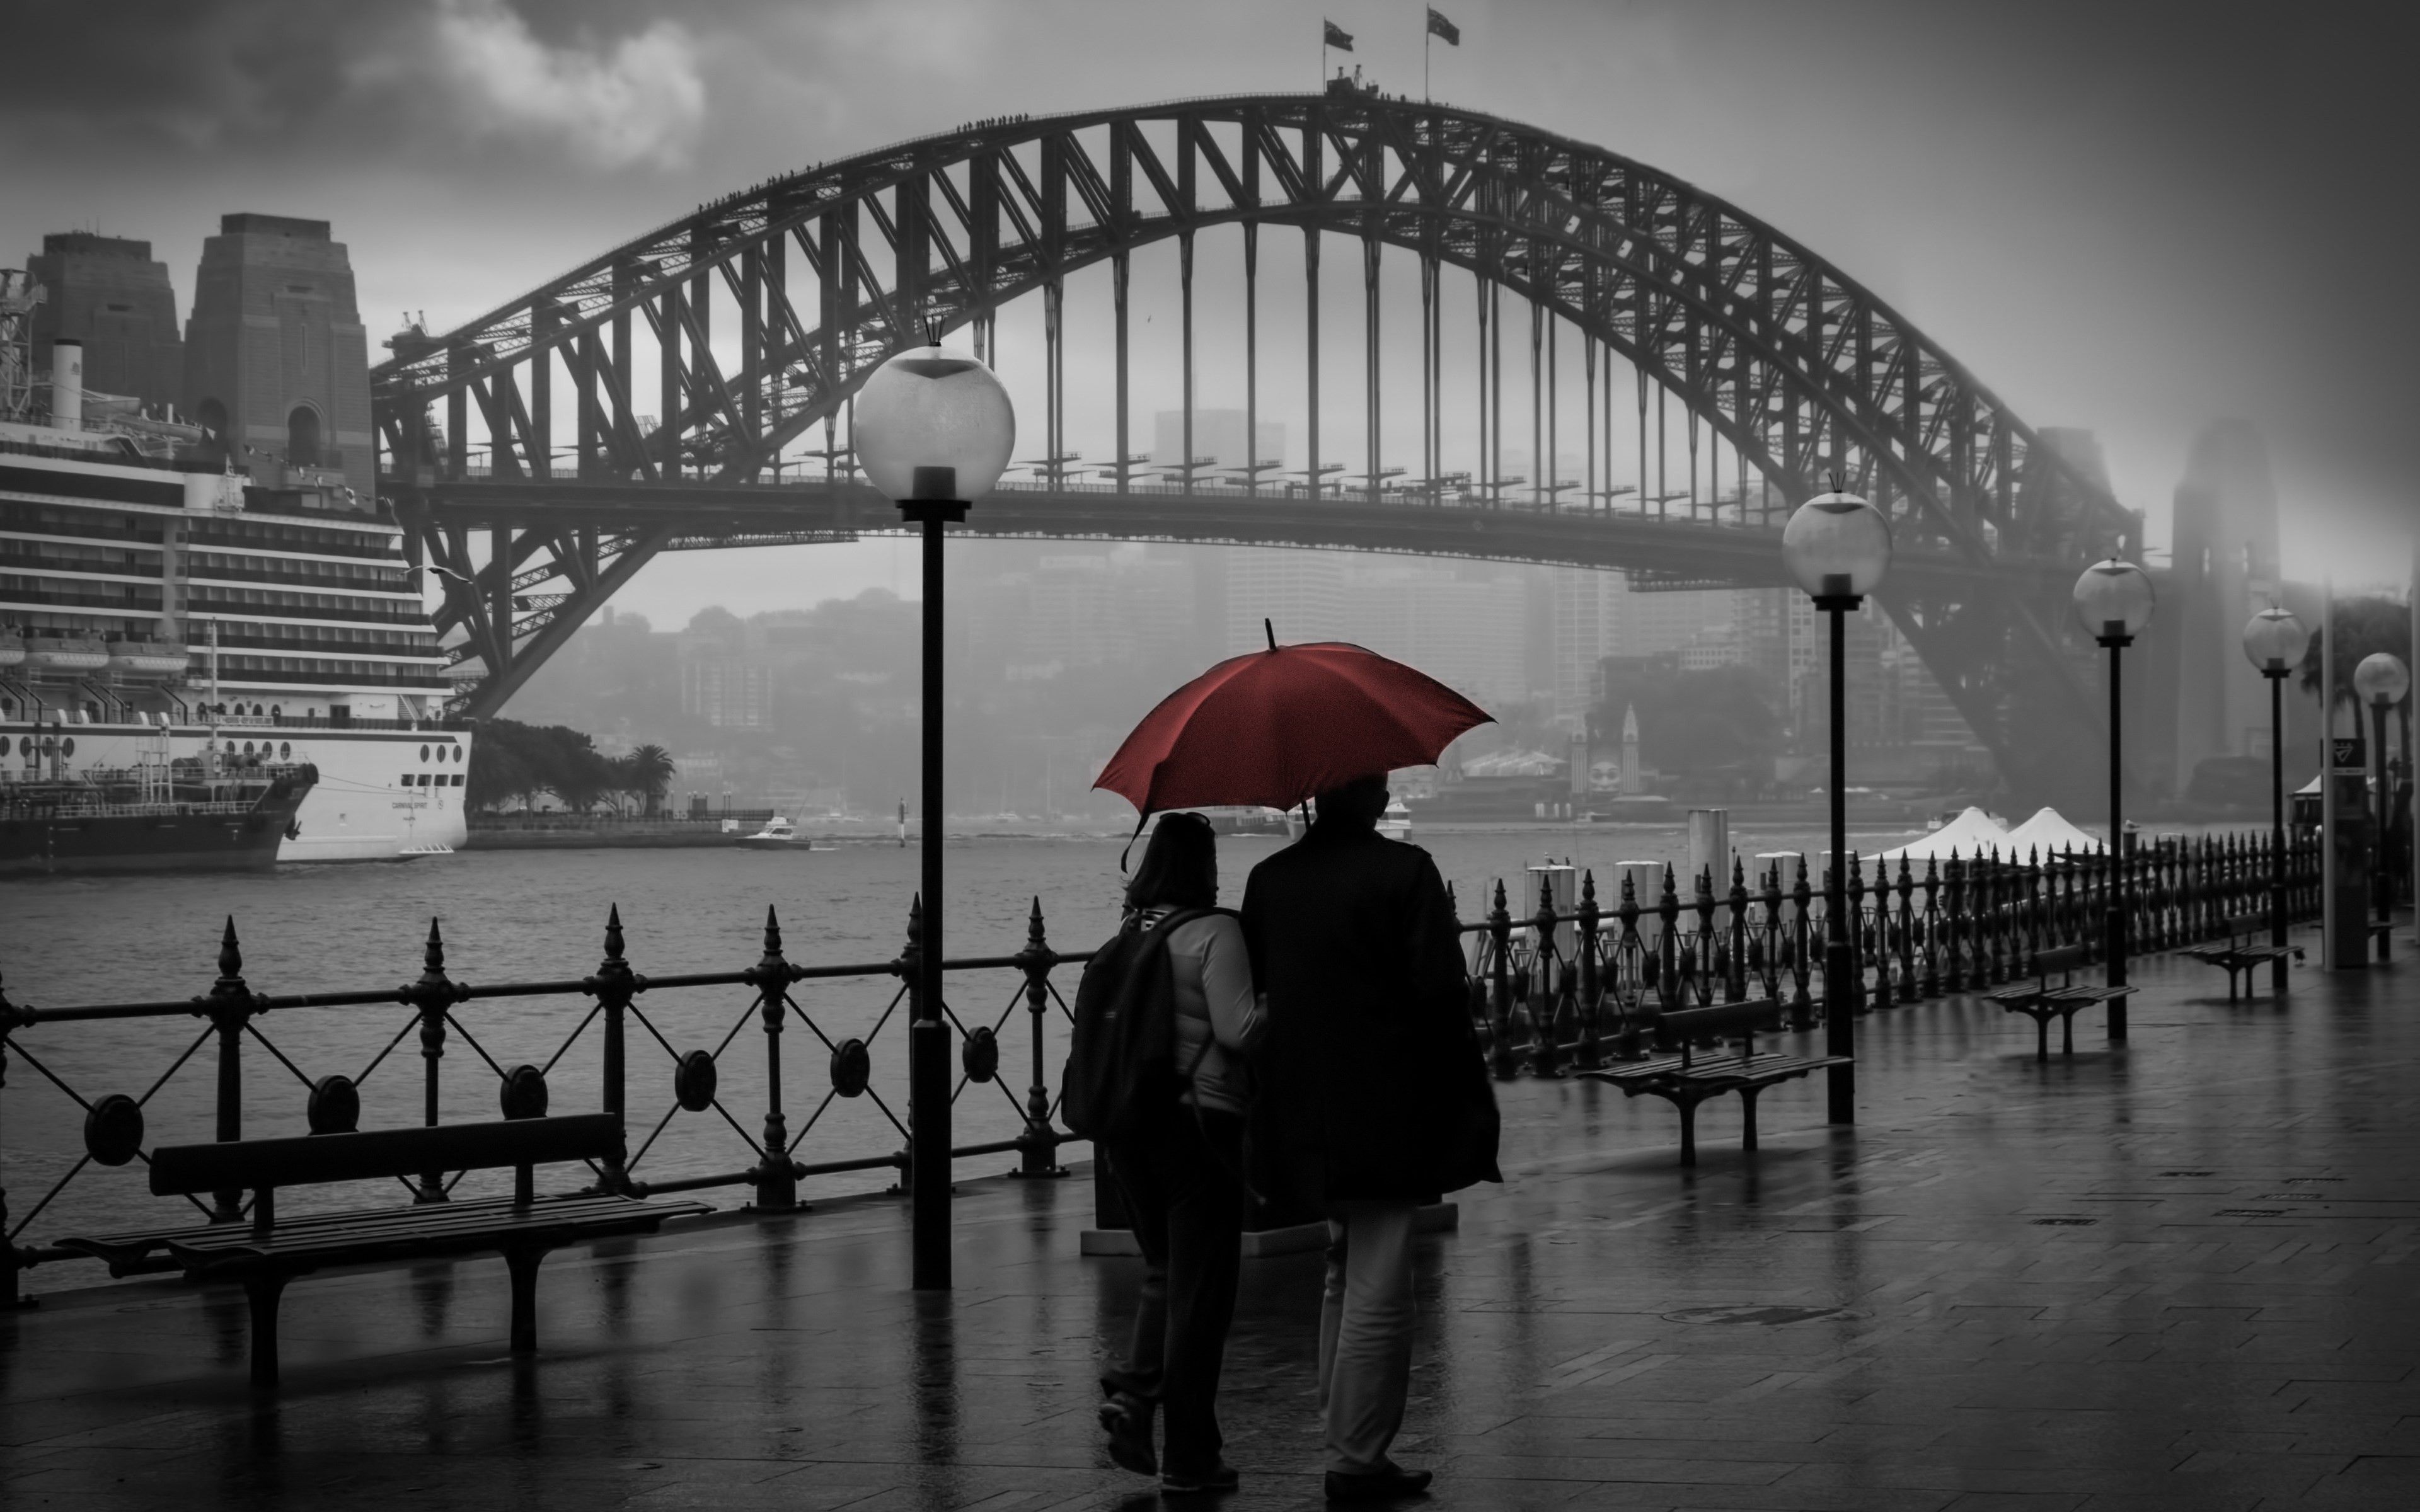 Download wallpaper: People visiting Circular Quay, Sydney 3840x2400